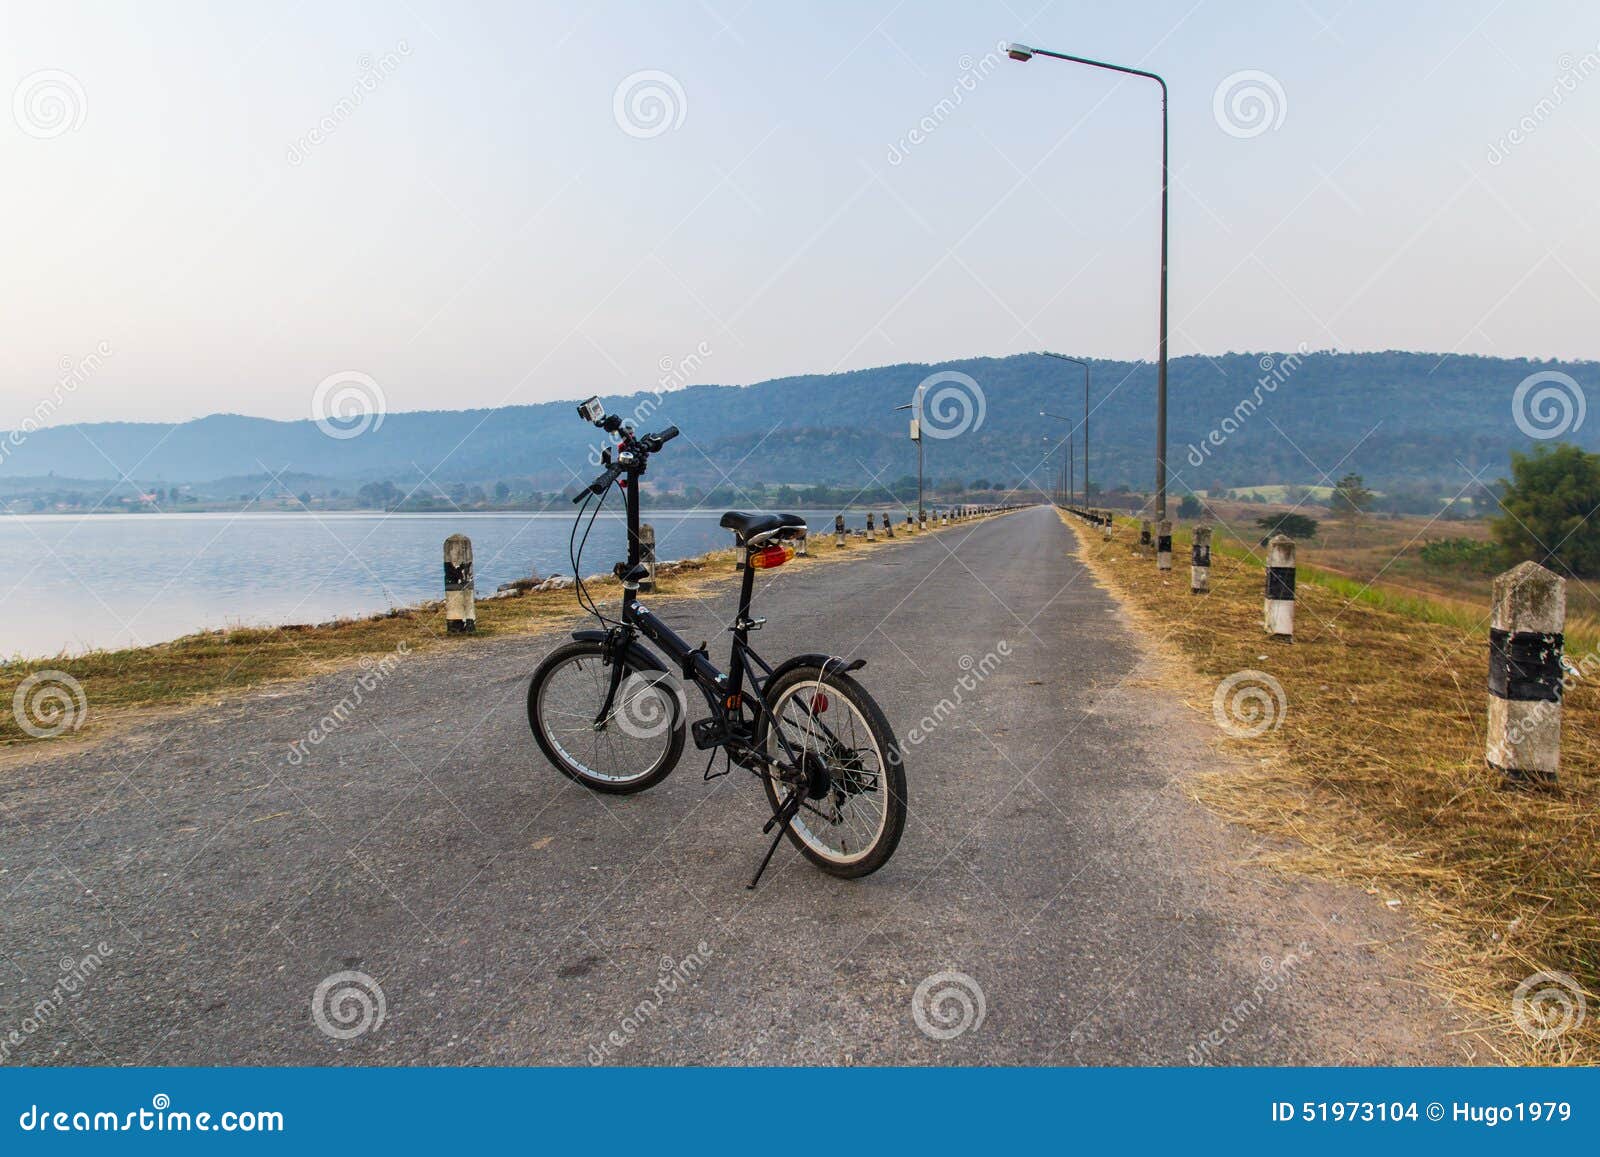 exercise bike with scenery